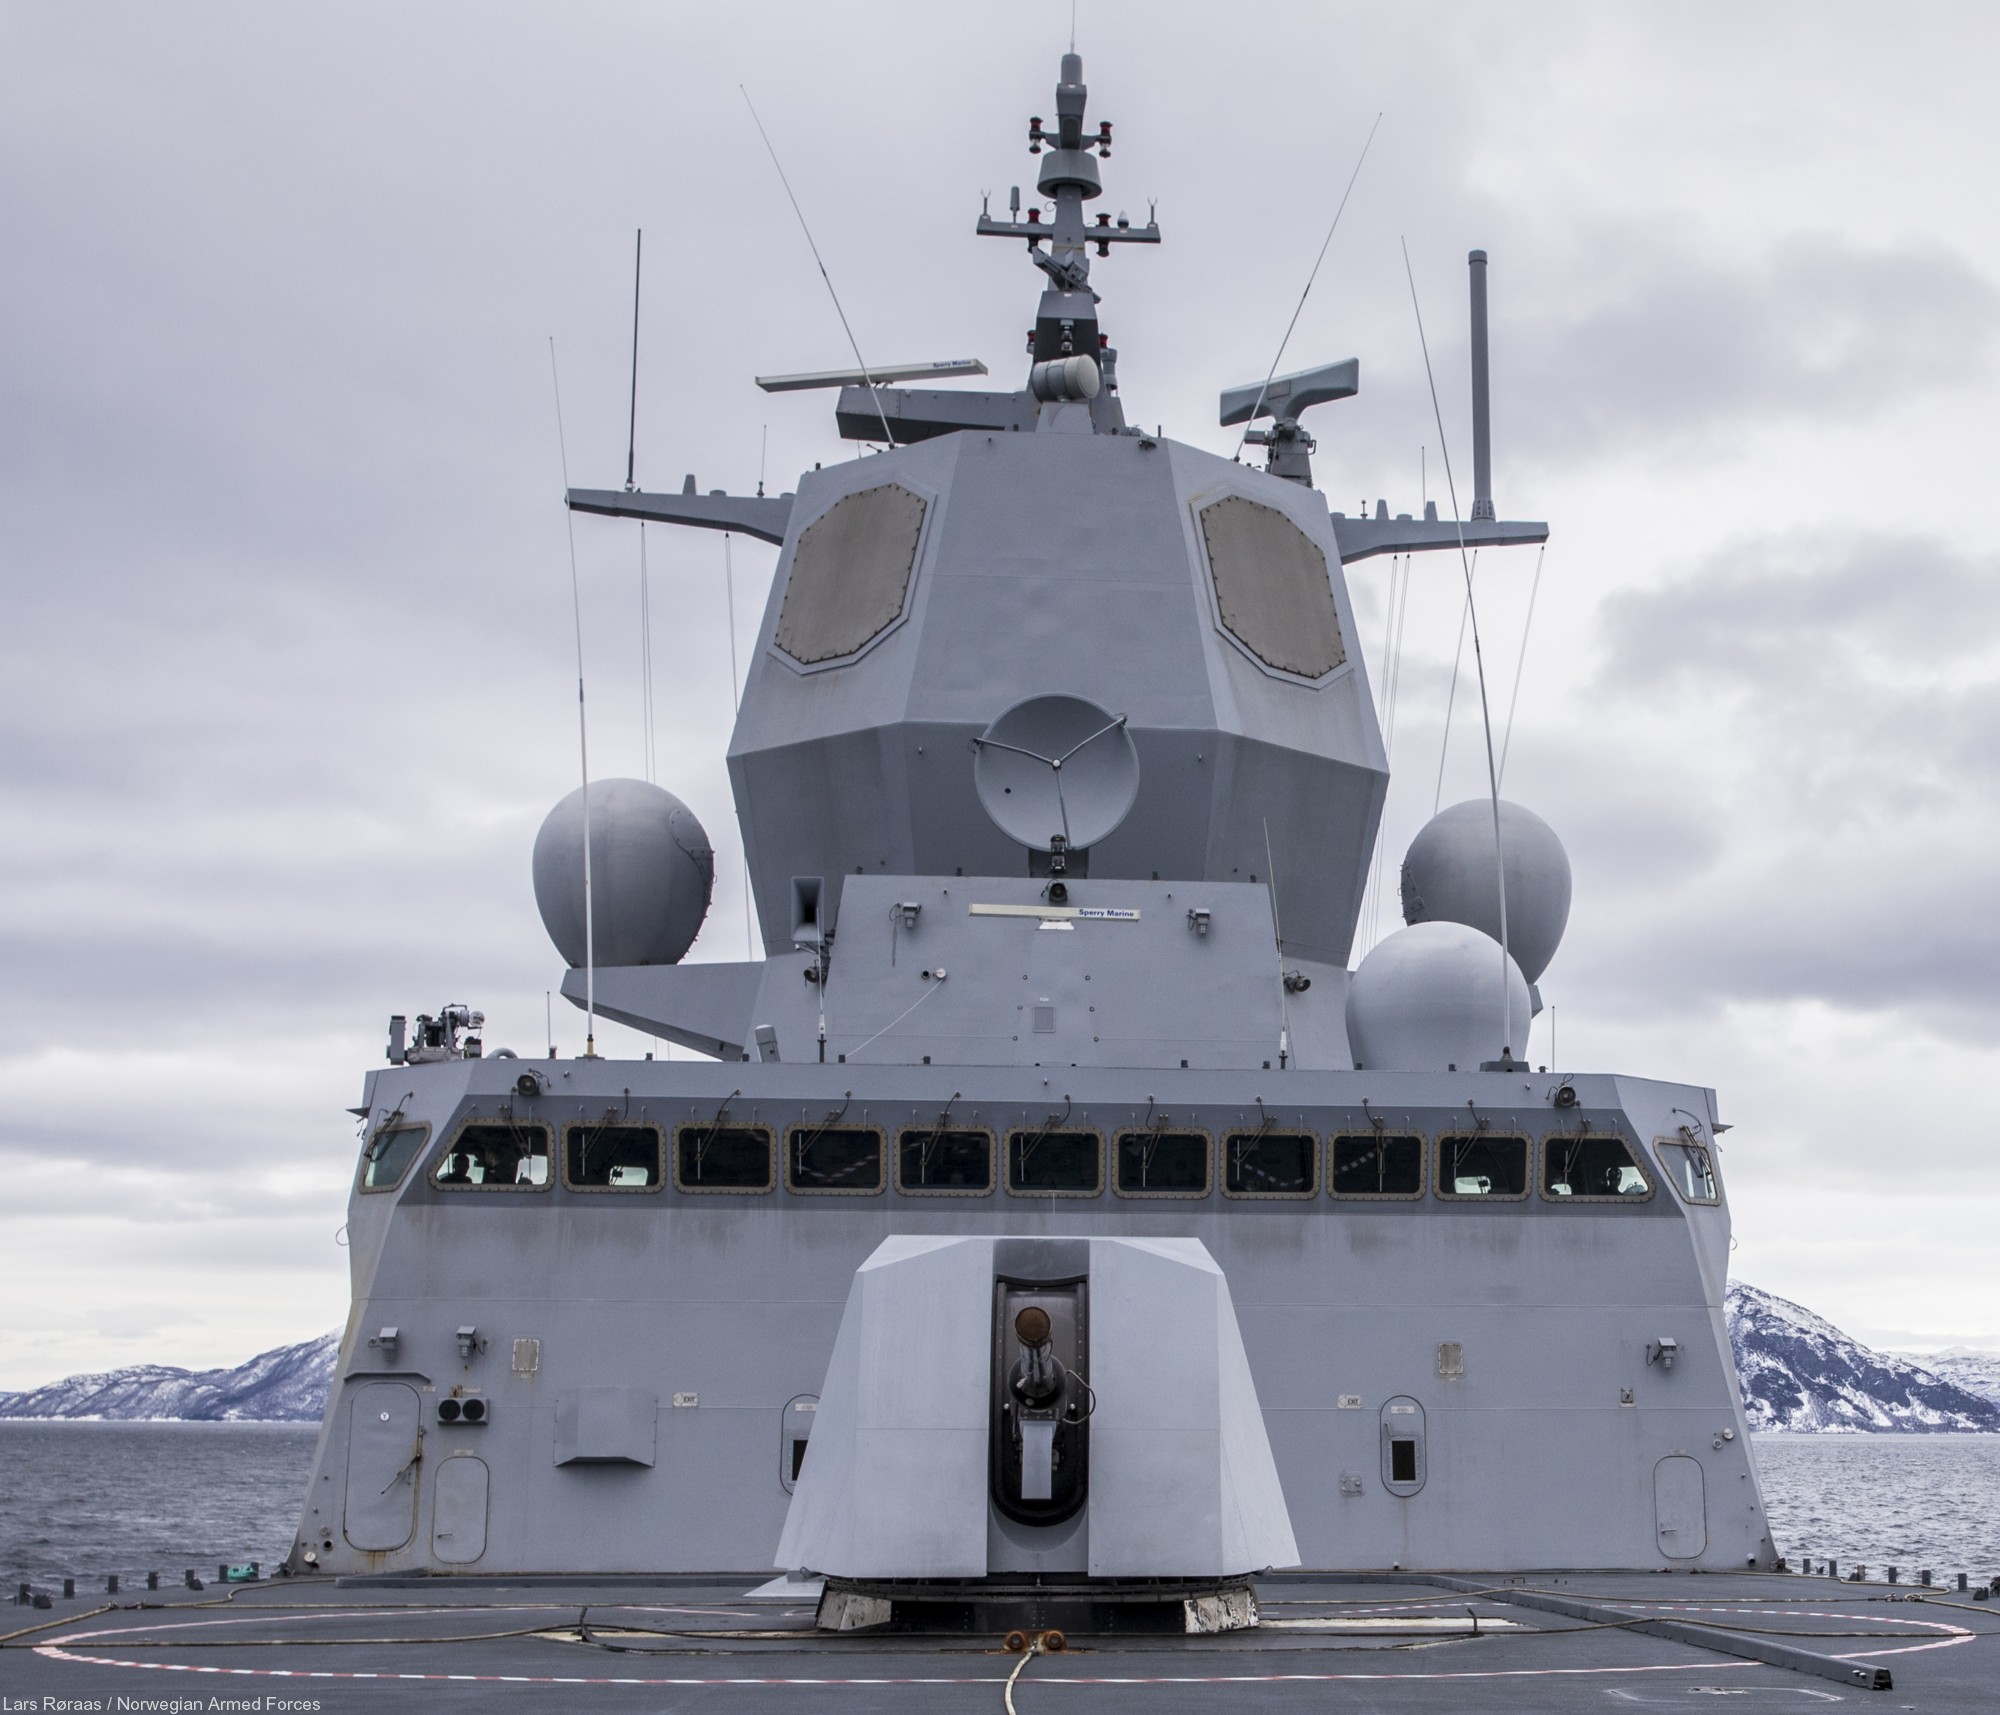 f-313 helge ingstad hnoms knm nansen class frigate royal norwegian navy 22 oto melara breda 76/62 gun